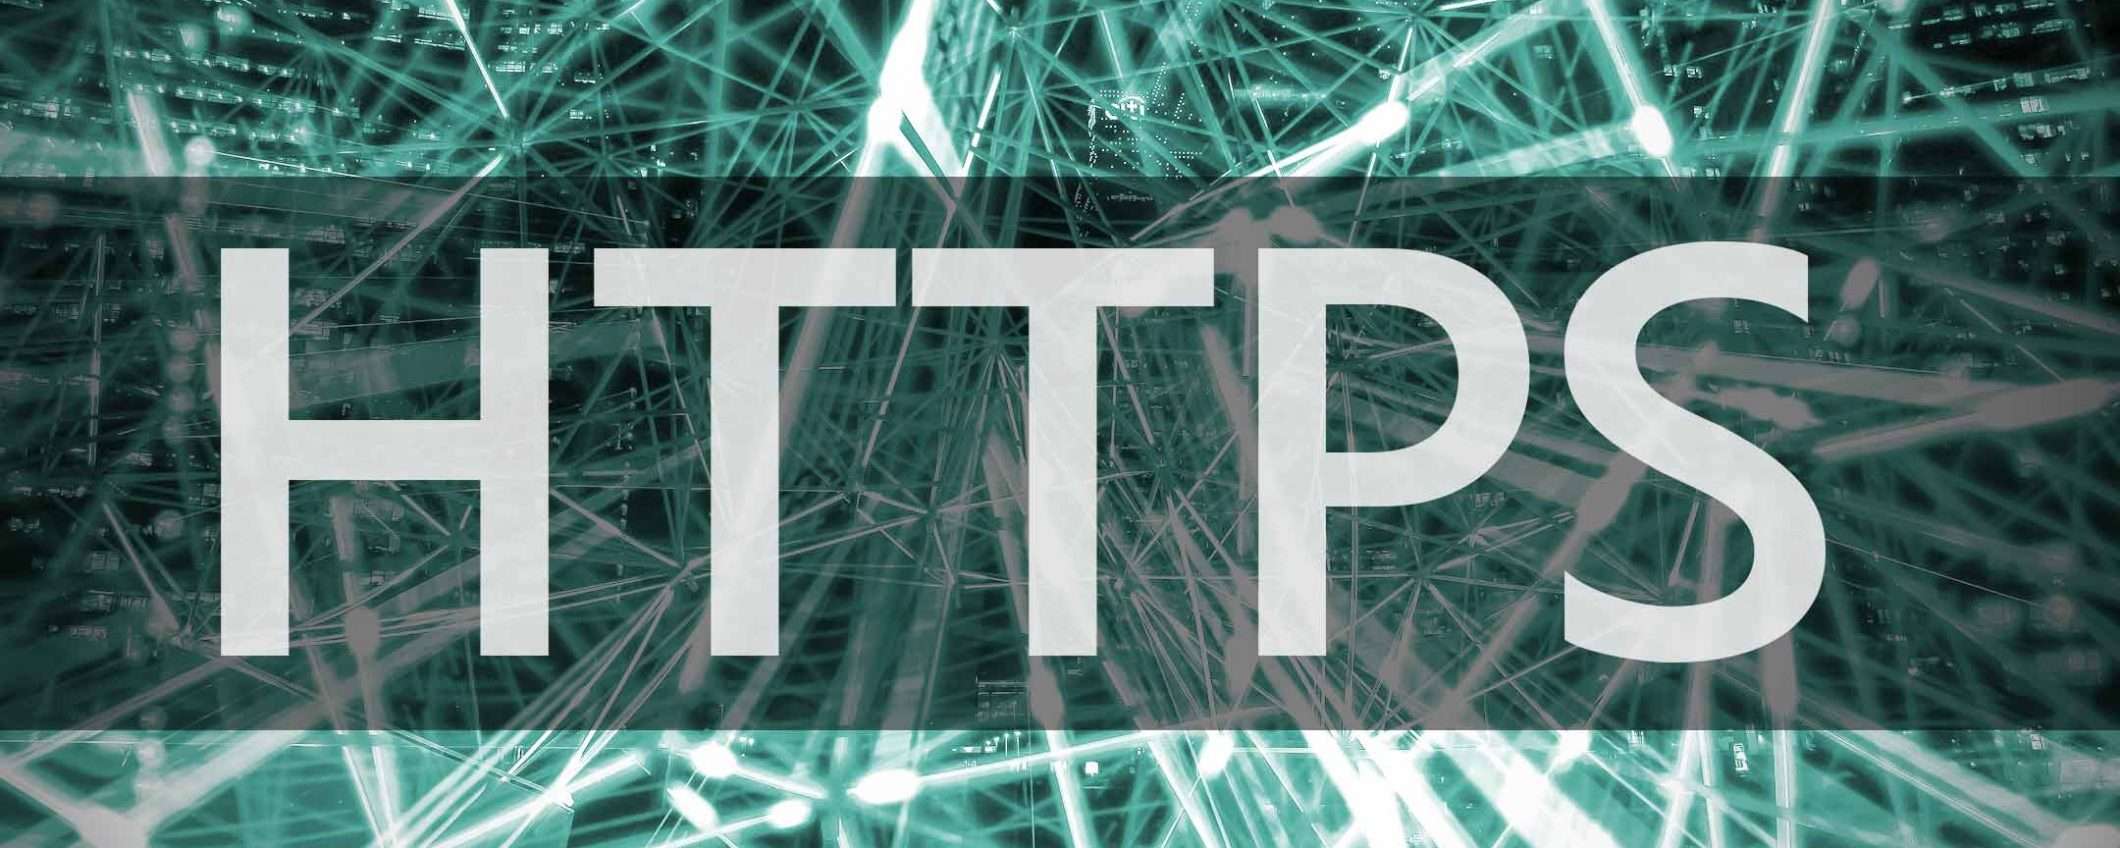 HTTPS: Let's Encrypt, un miliardo di certificati